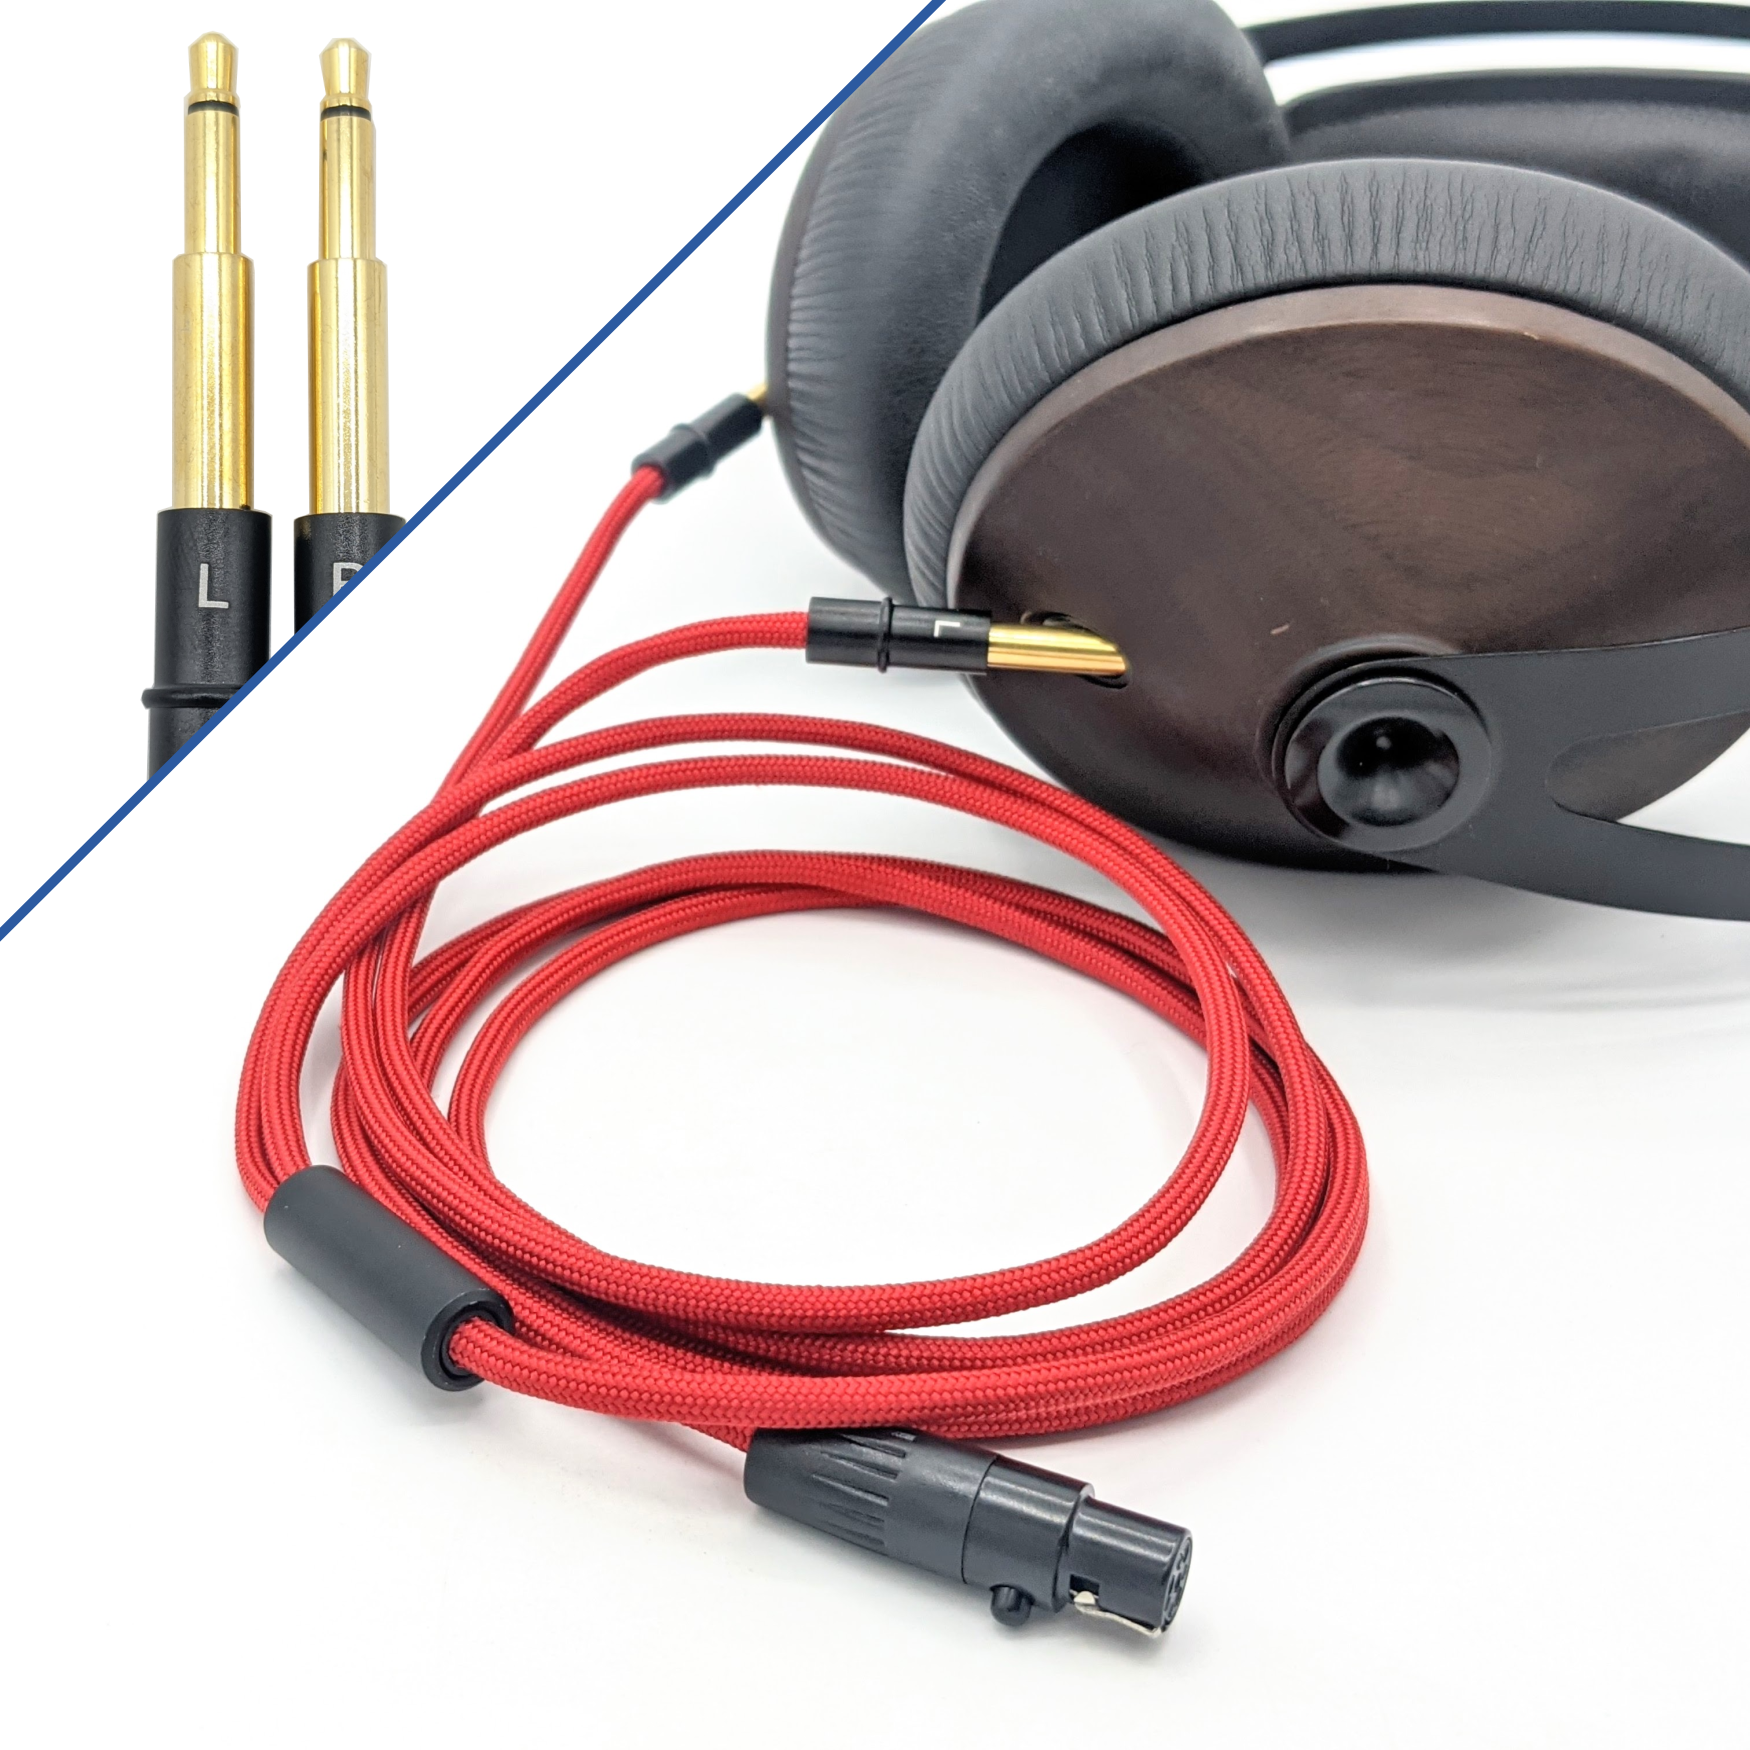 HC-14: Dual 3.5mm balanced cable for Meze headphones